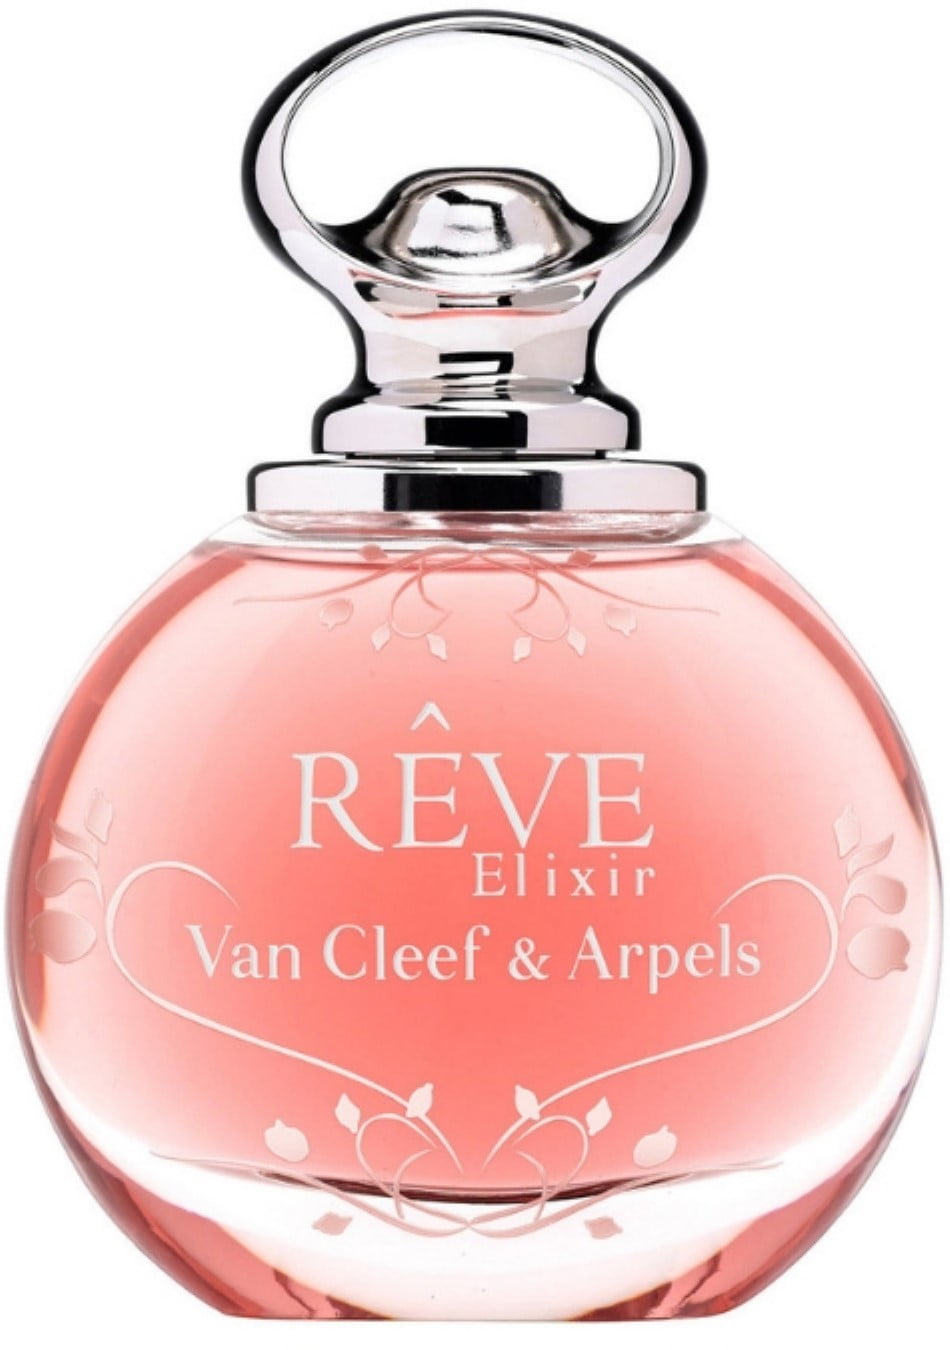 Van Cleef & Arpels, Reve Elixir Eau Parfum Spray - Walmart.com